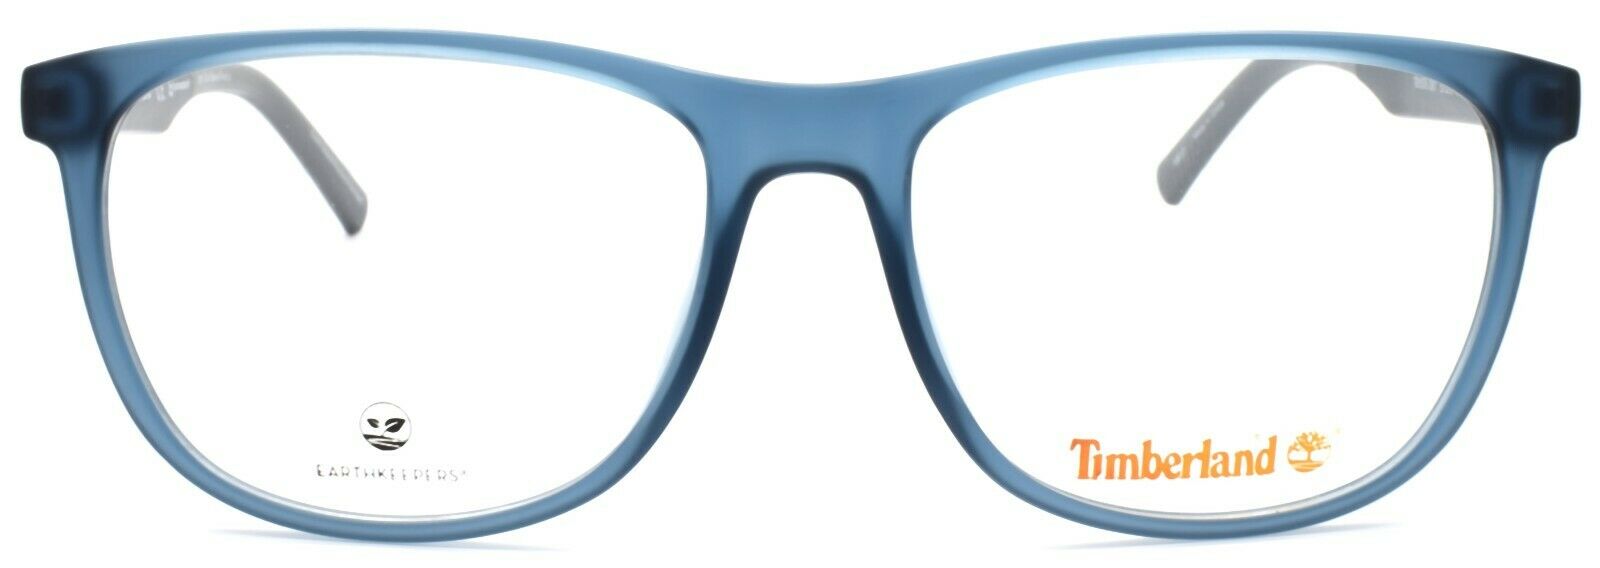 2-TIMBERLAND TB1576 091 Men's Eyeglasses Frames 57-17-145 Matte Blue + CASE-664689913305-IKSpecs